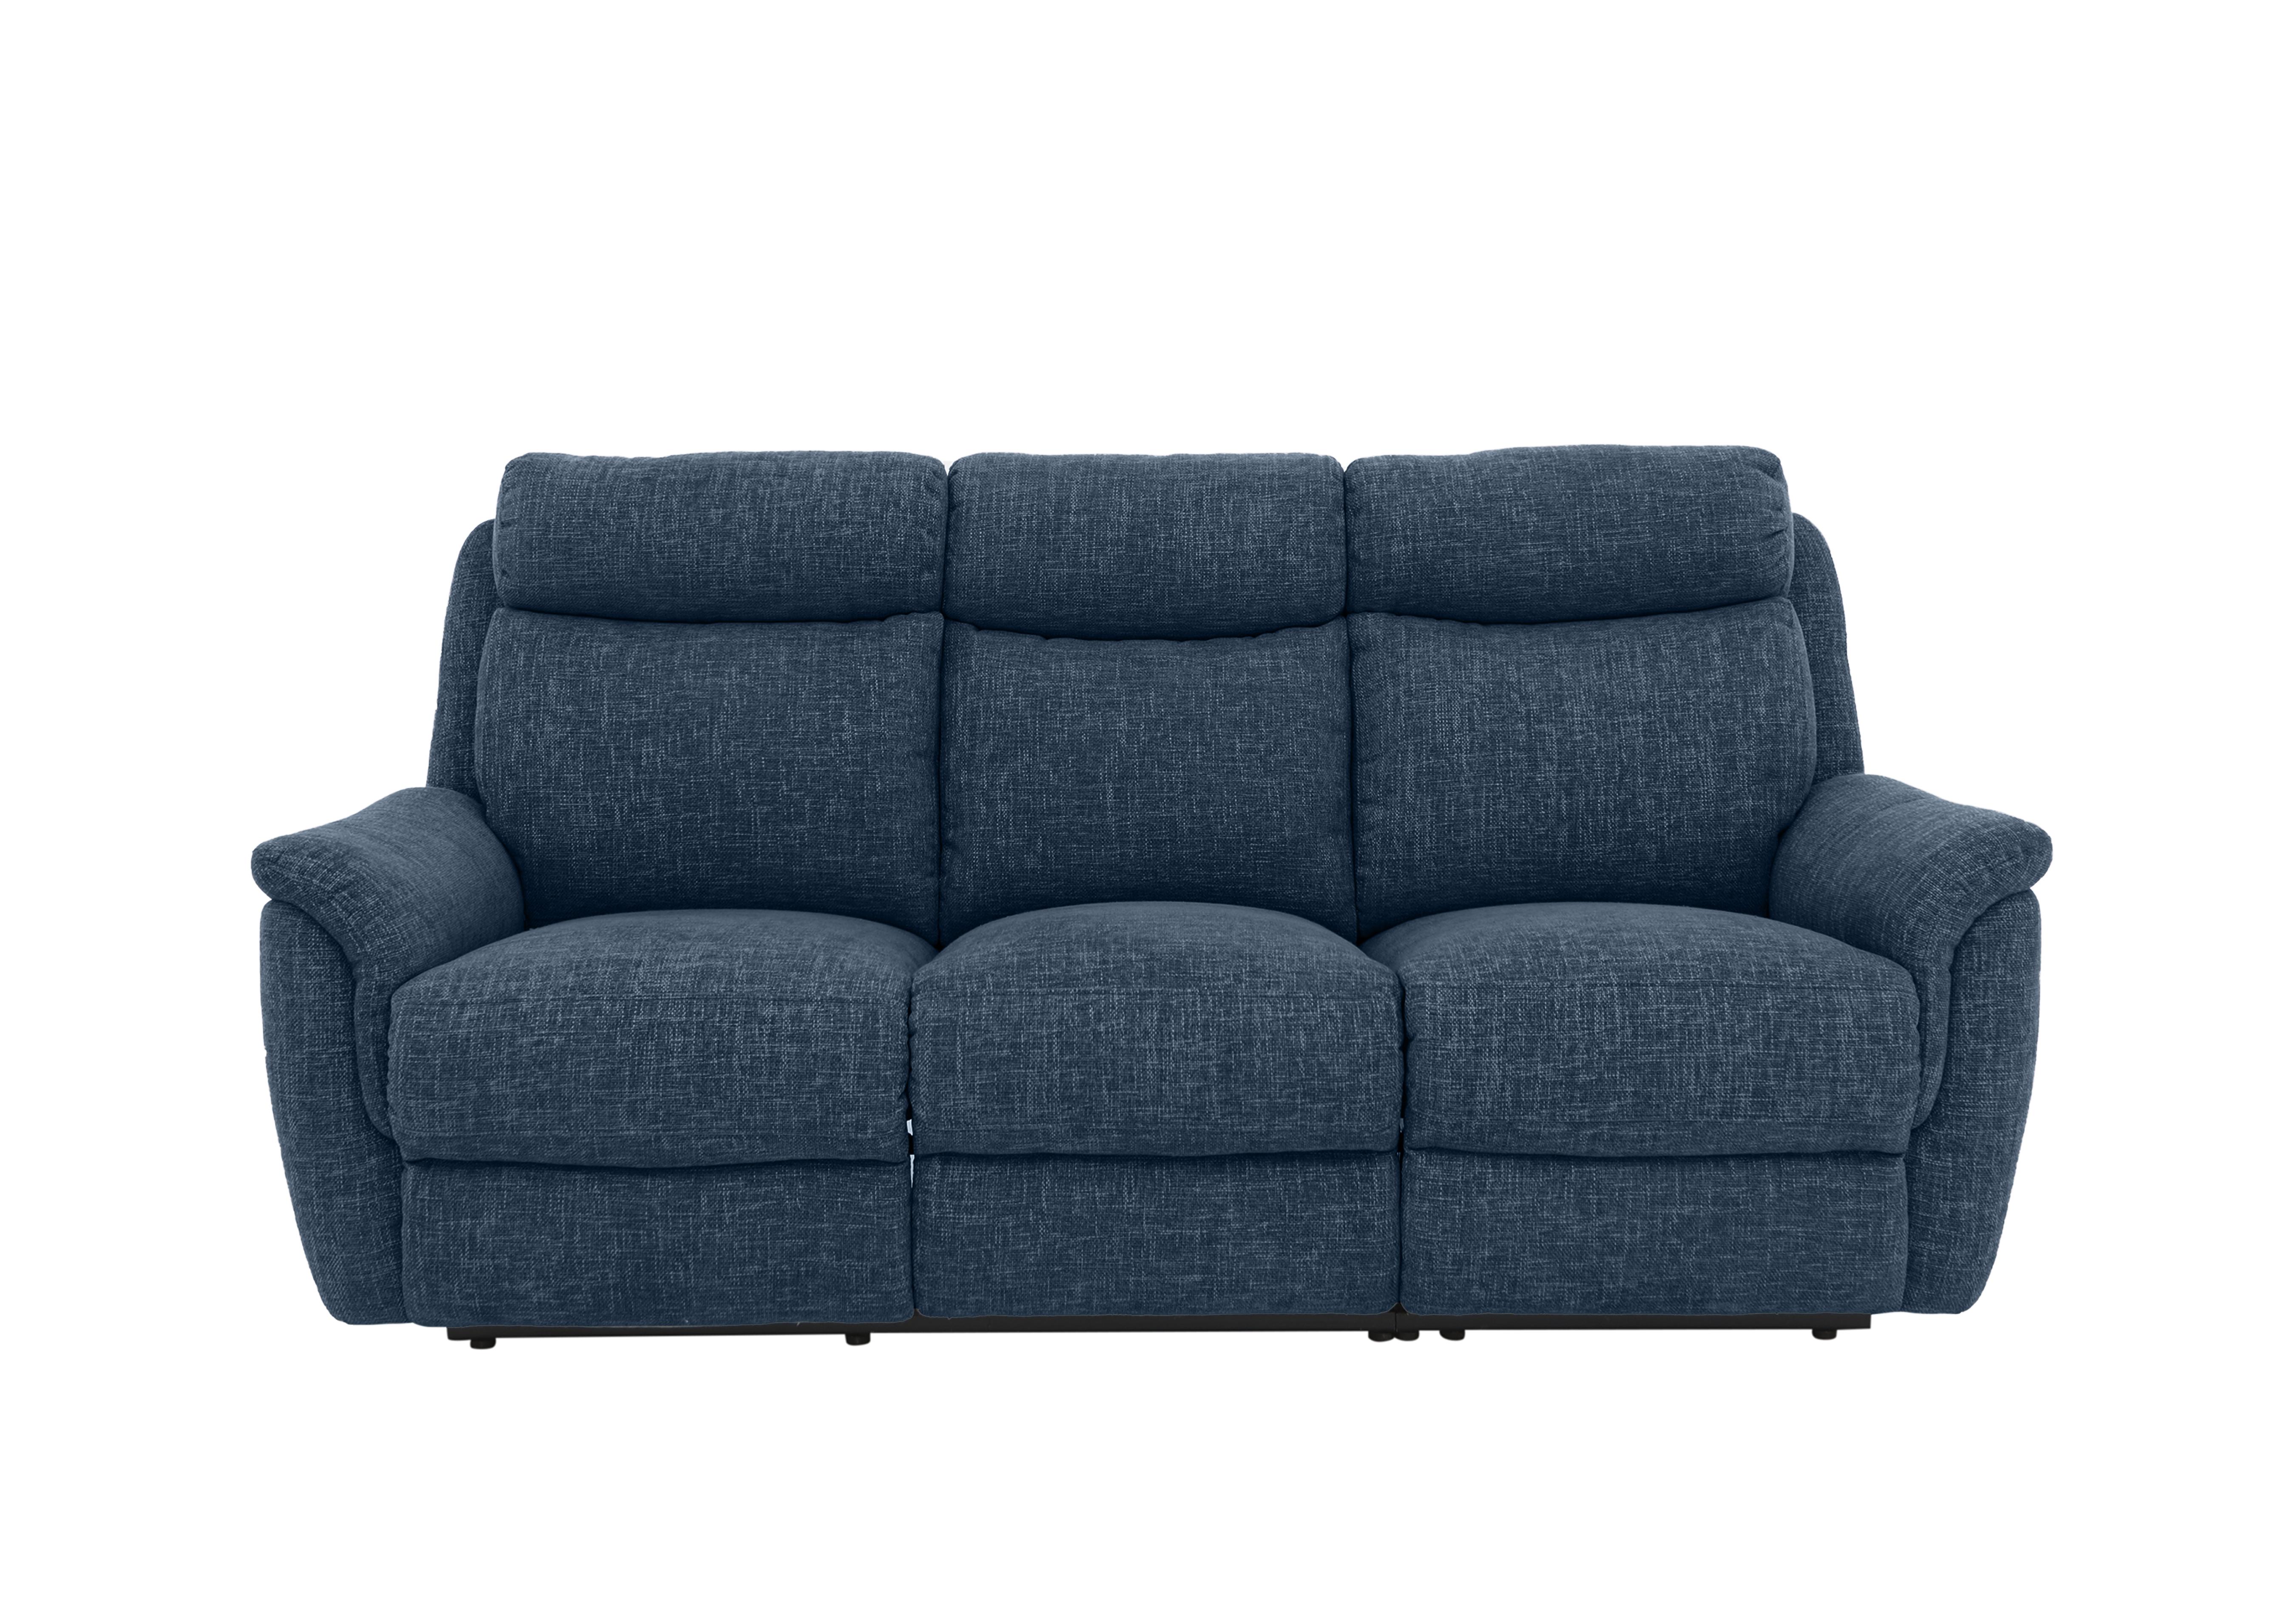 Orlando 3 Seater Fabric Sofa in Anivia Blue 15045 on Furniture Village